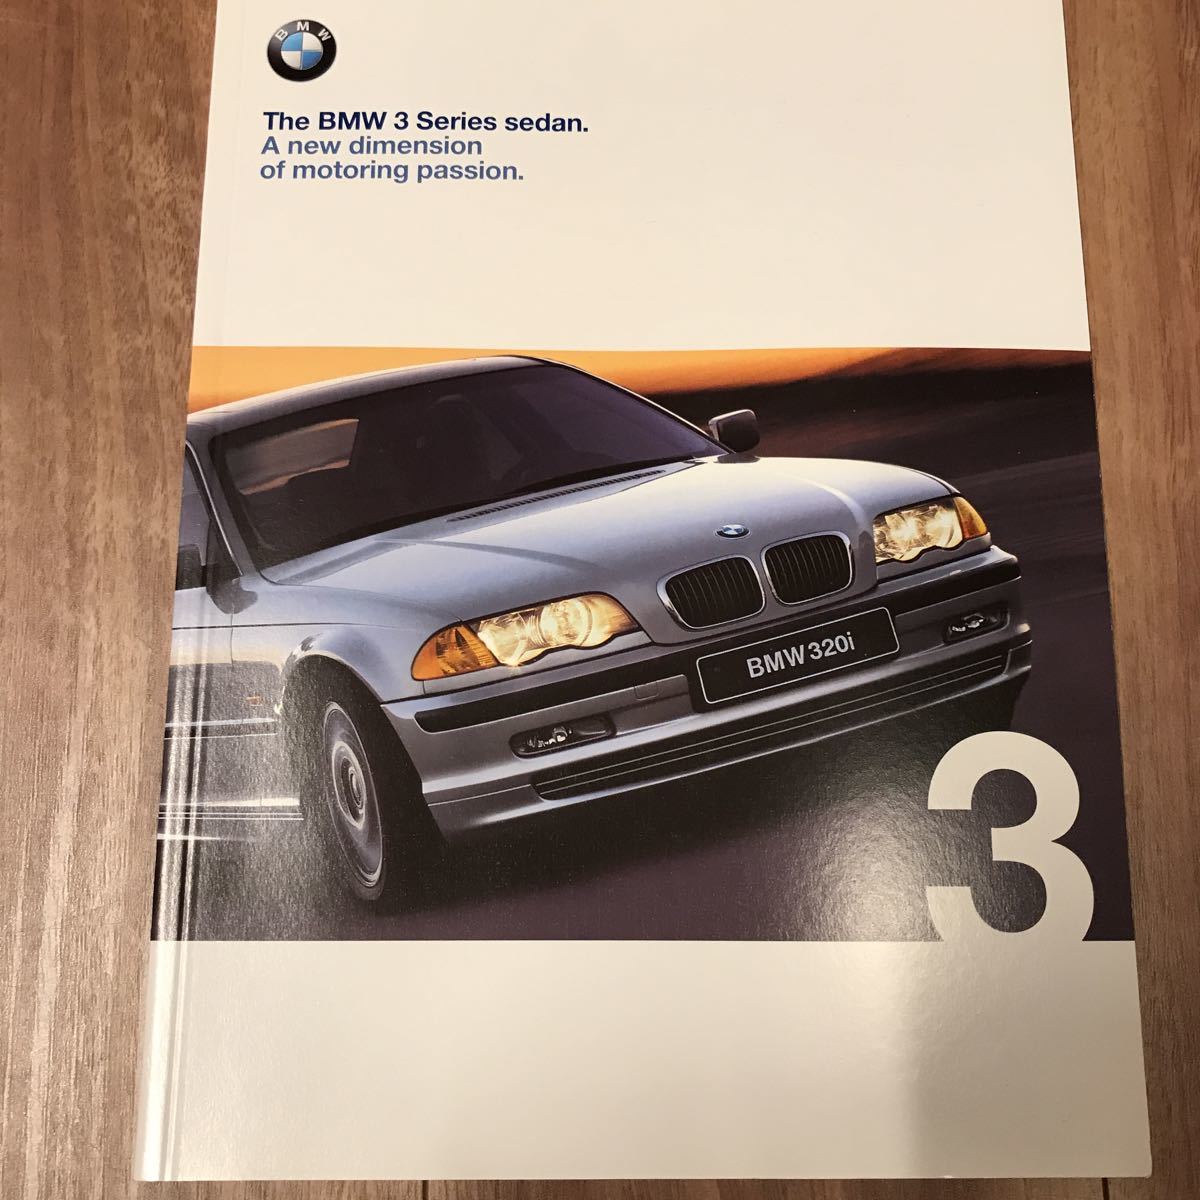 BMW E46 3シリーズセダン厚手,328Ci専用厚手 カタログ2冊セット 1999年発行版 日本語版 Printed in Germany未読 美品！_画像2